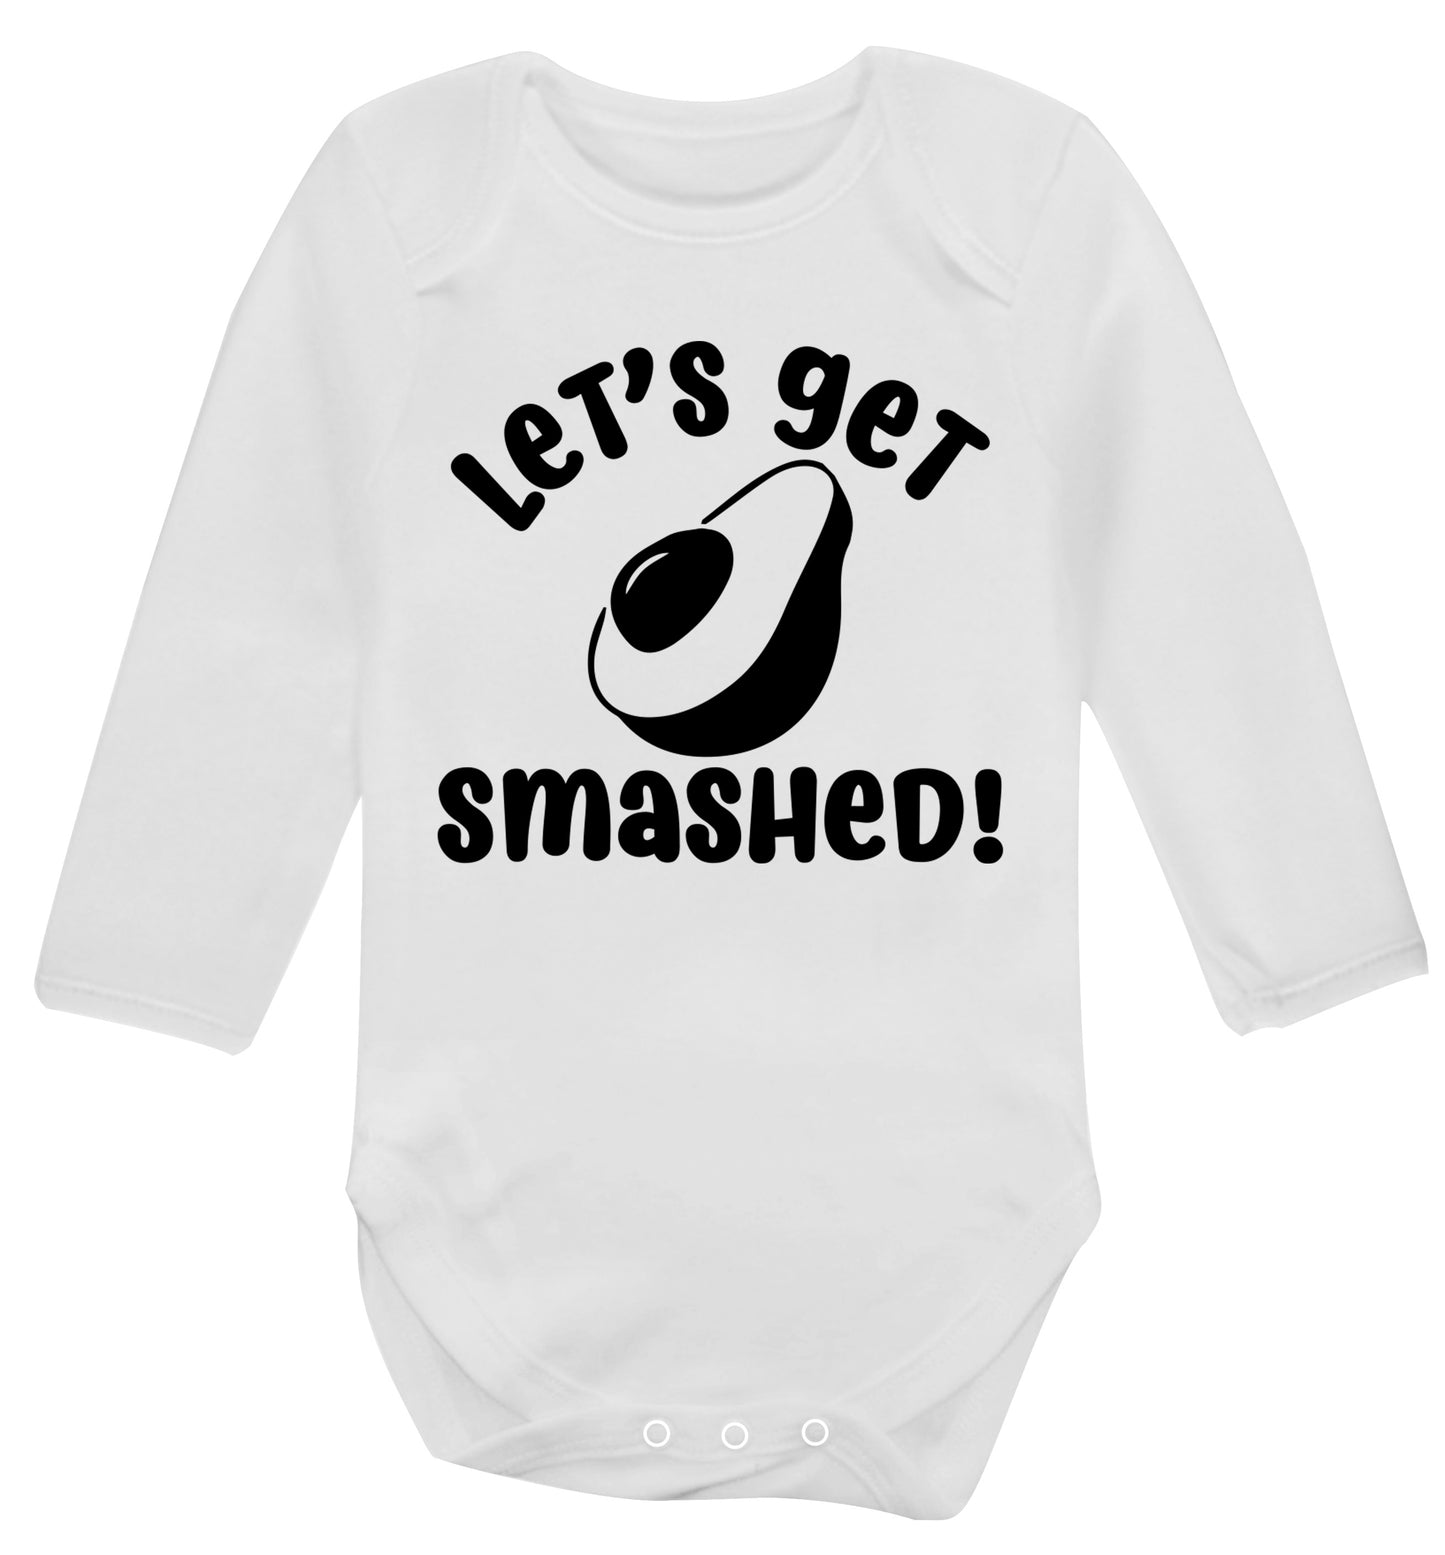 Let's get smashed Baby Vest long sleeved white 6-12 months